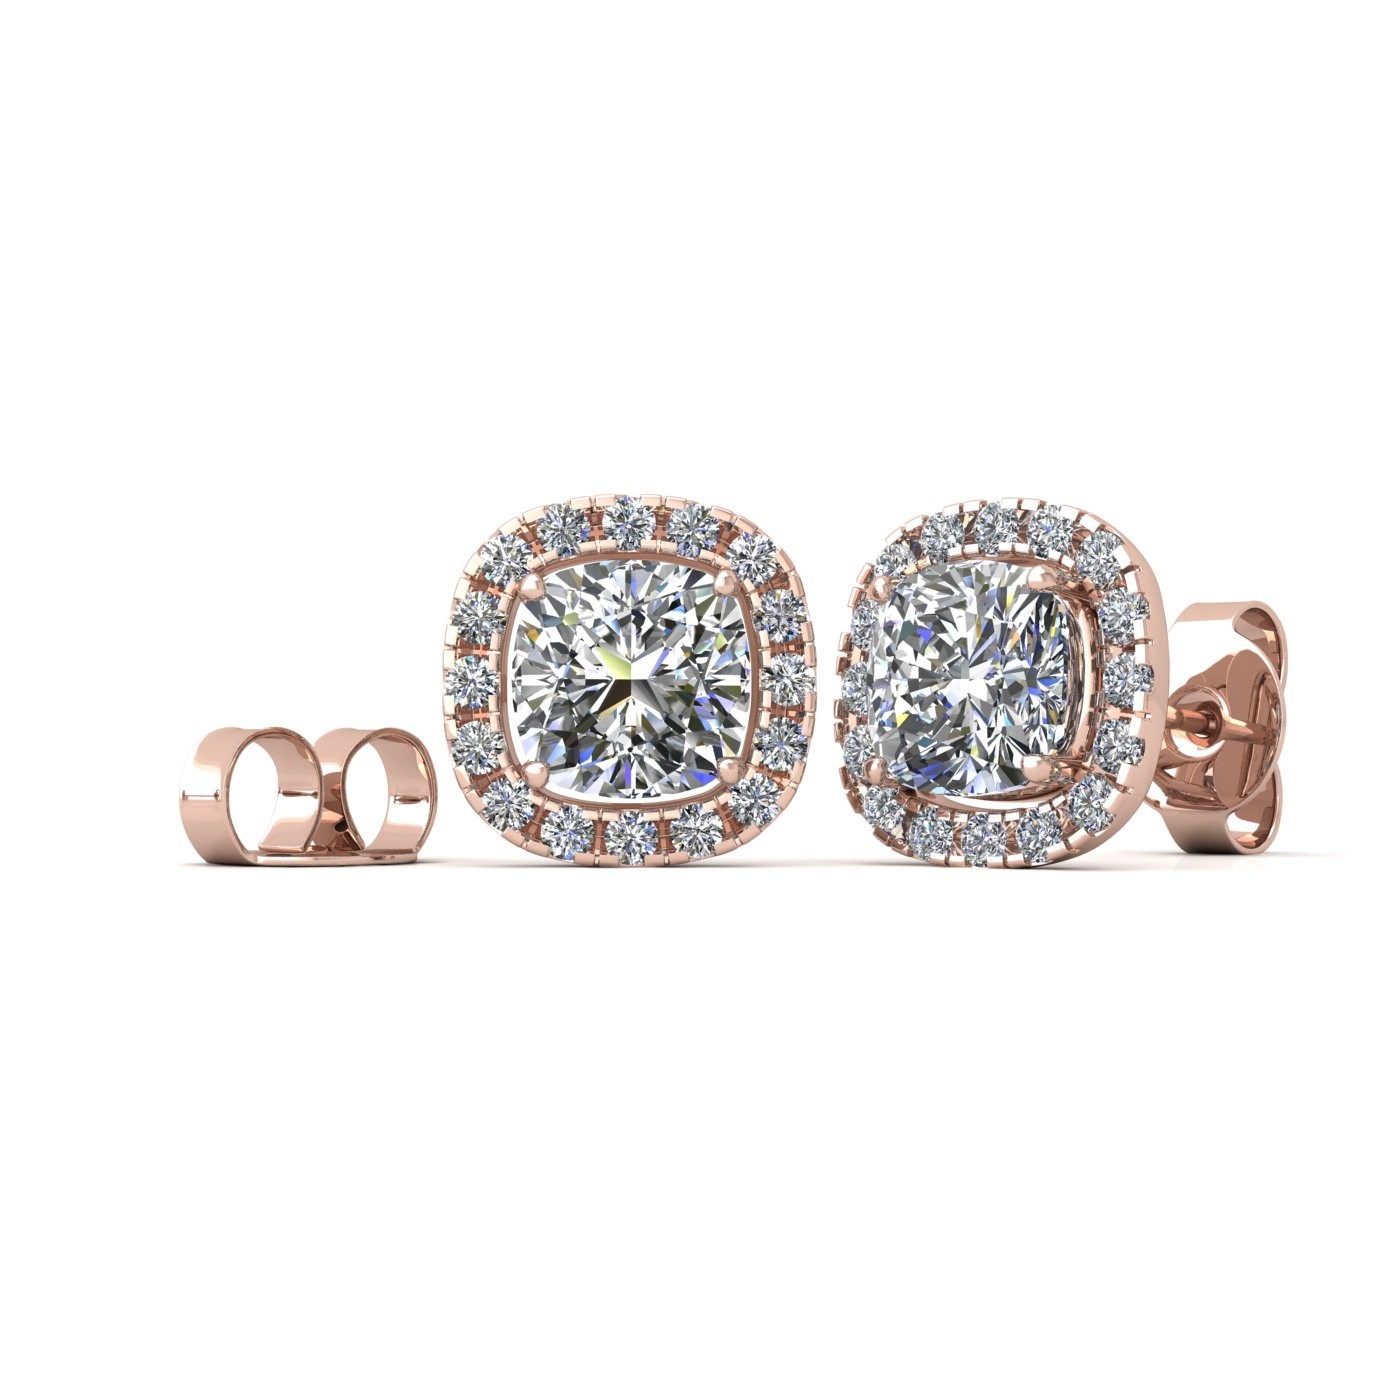 18k rose gold  0,5 ct each (1,0 tcw) 4 prongs cushion shape diamond earrings with diamond pavÉ set halo Photos & images